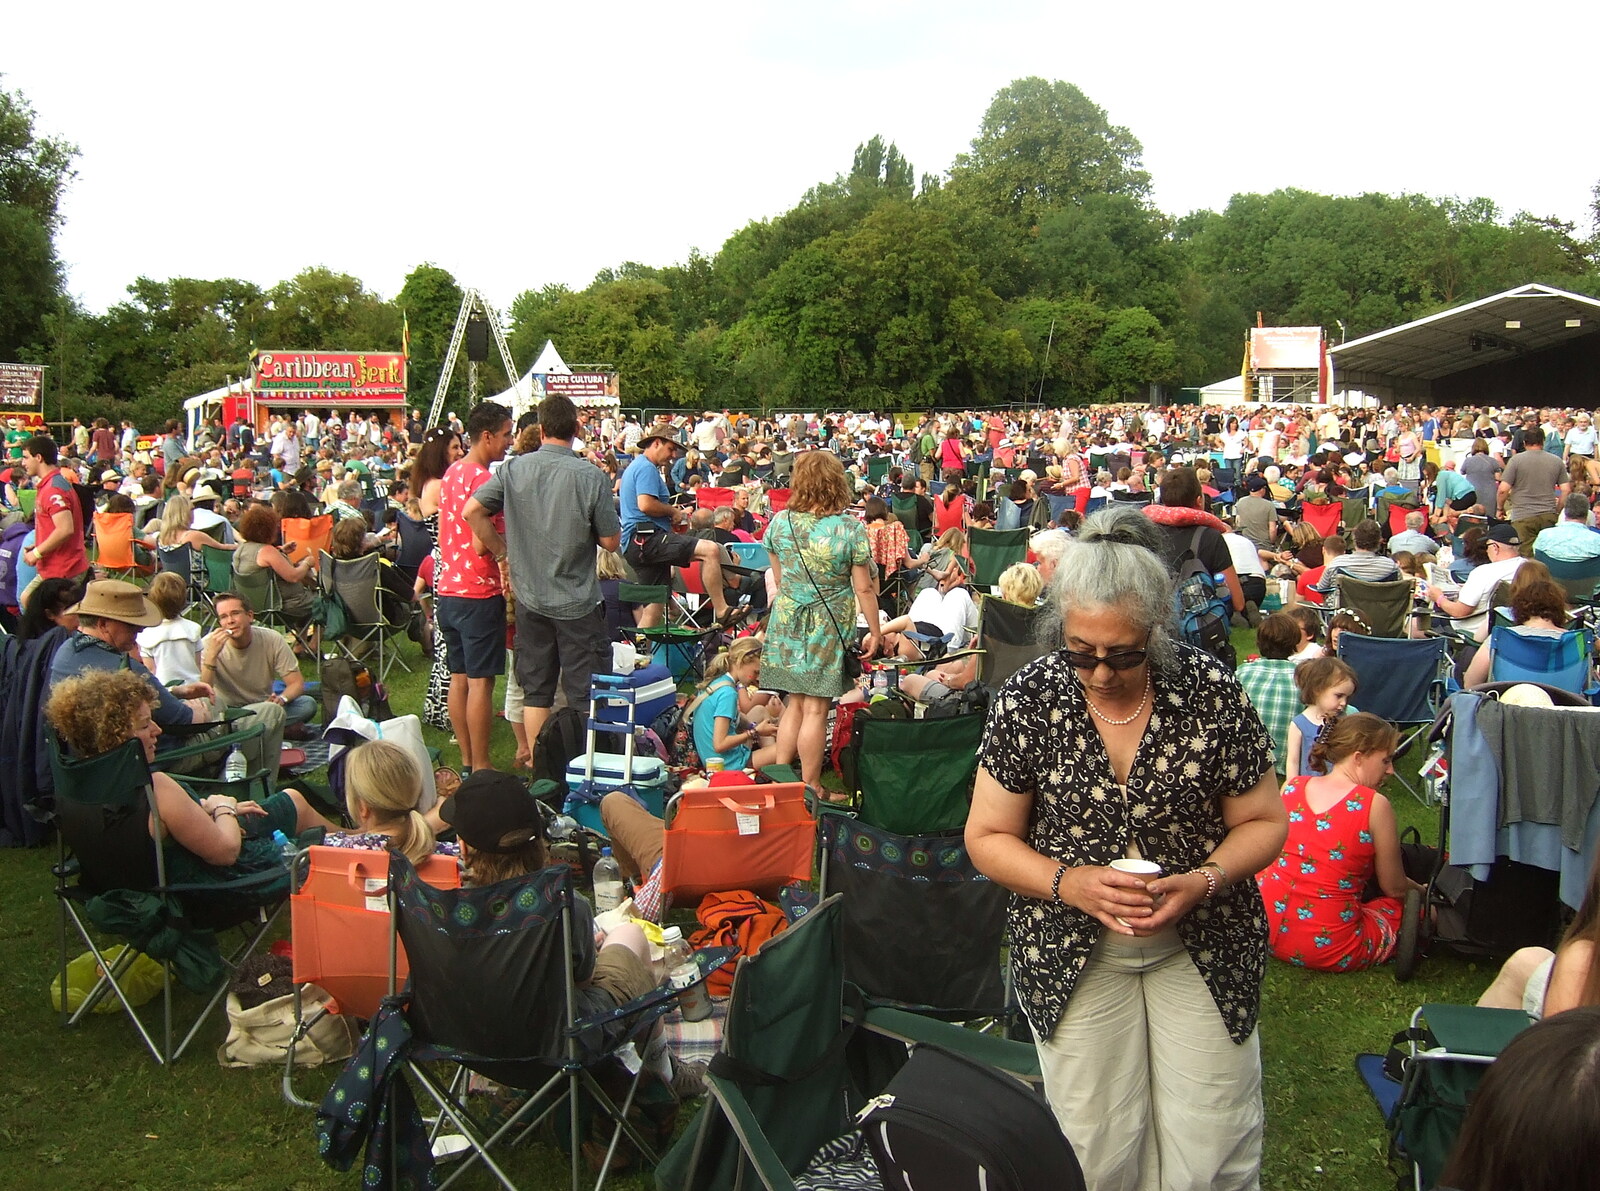 The festival crowd from The Cambridge Folk Festival, Cherry Hinton, Cambridge - 28th July 2012